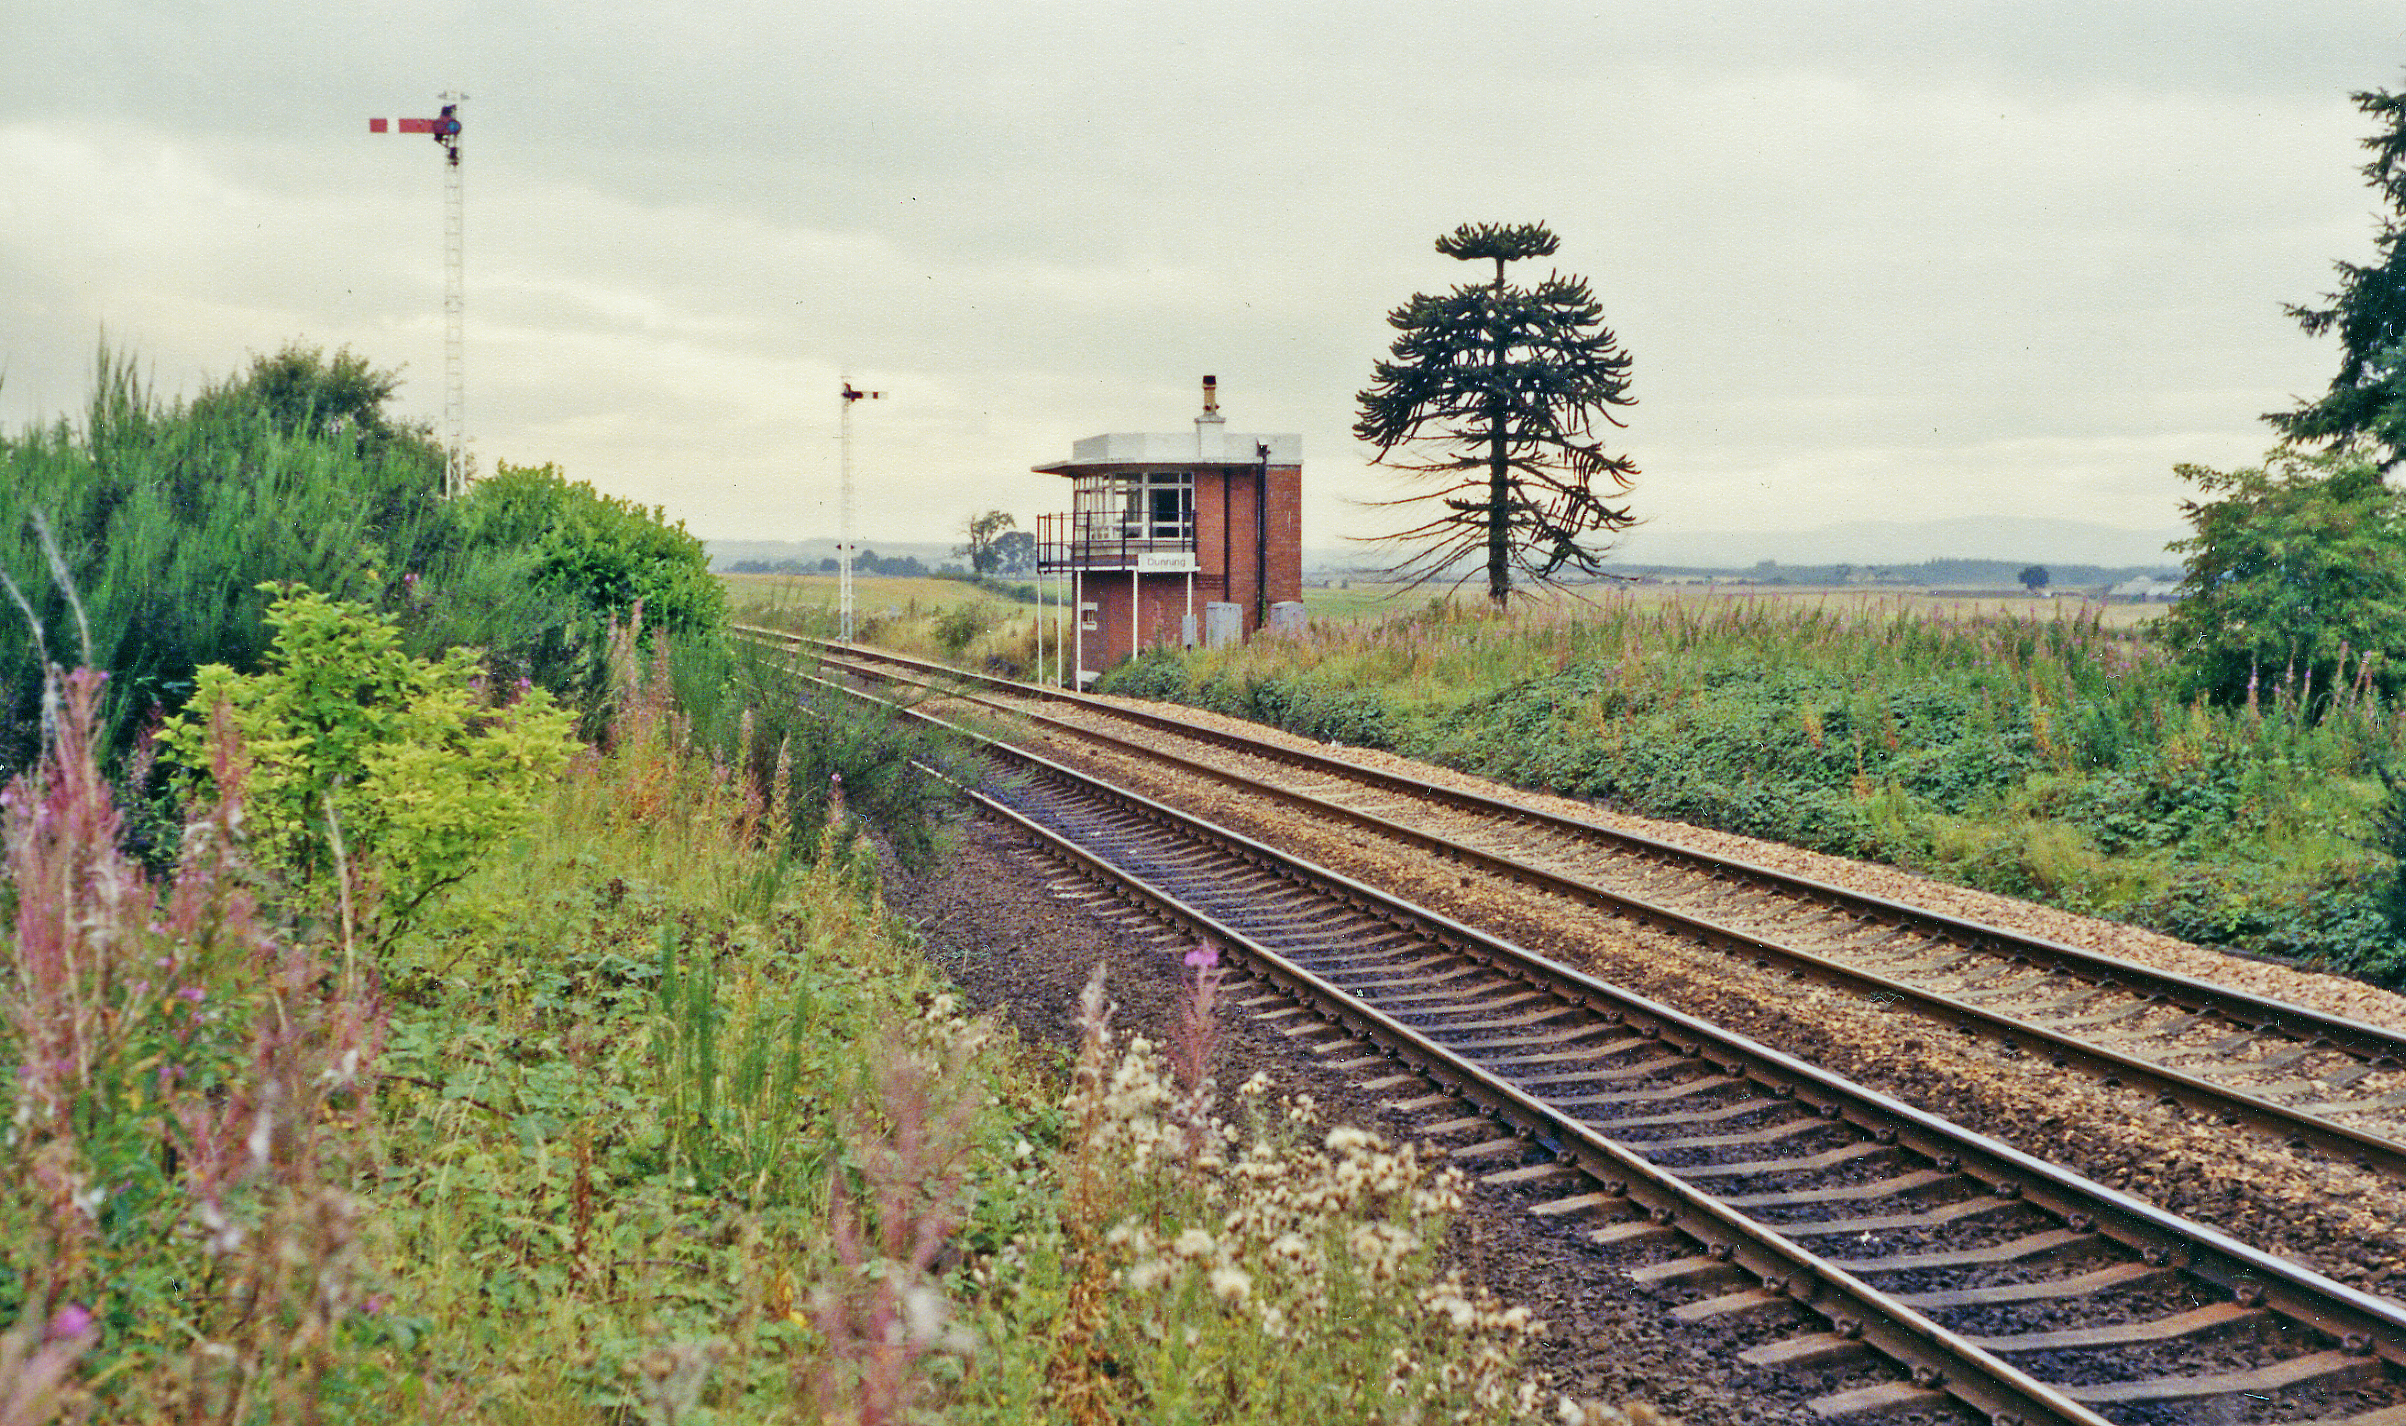 Dunning railway station